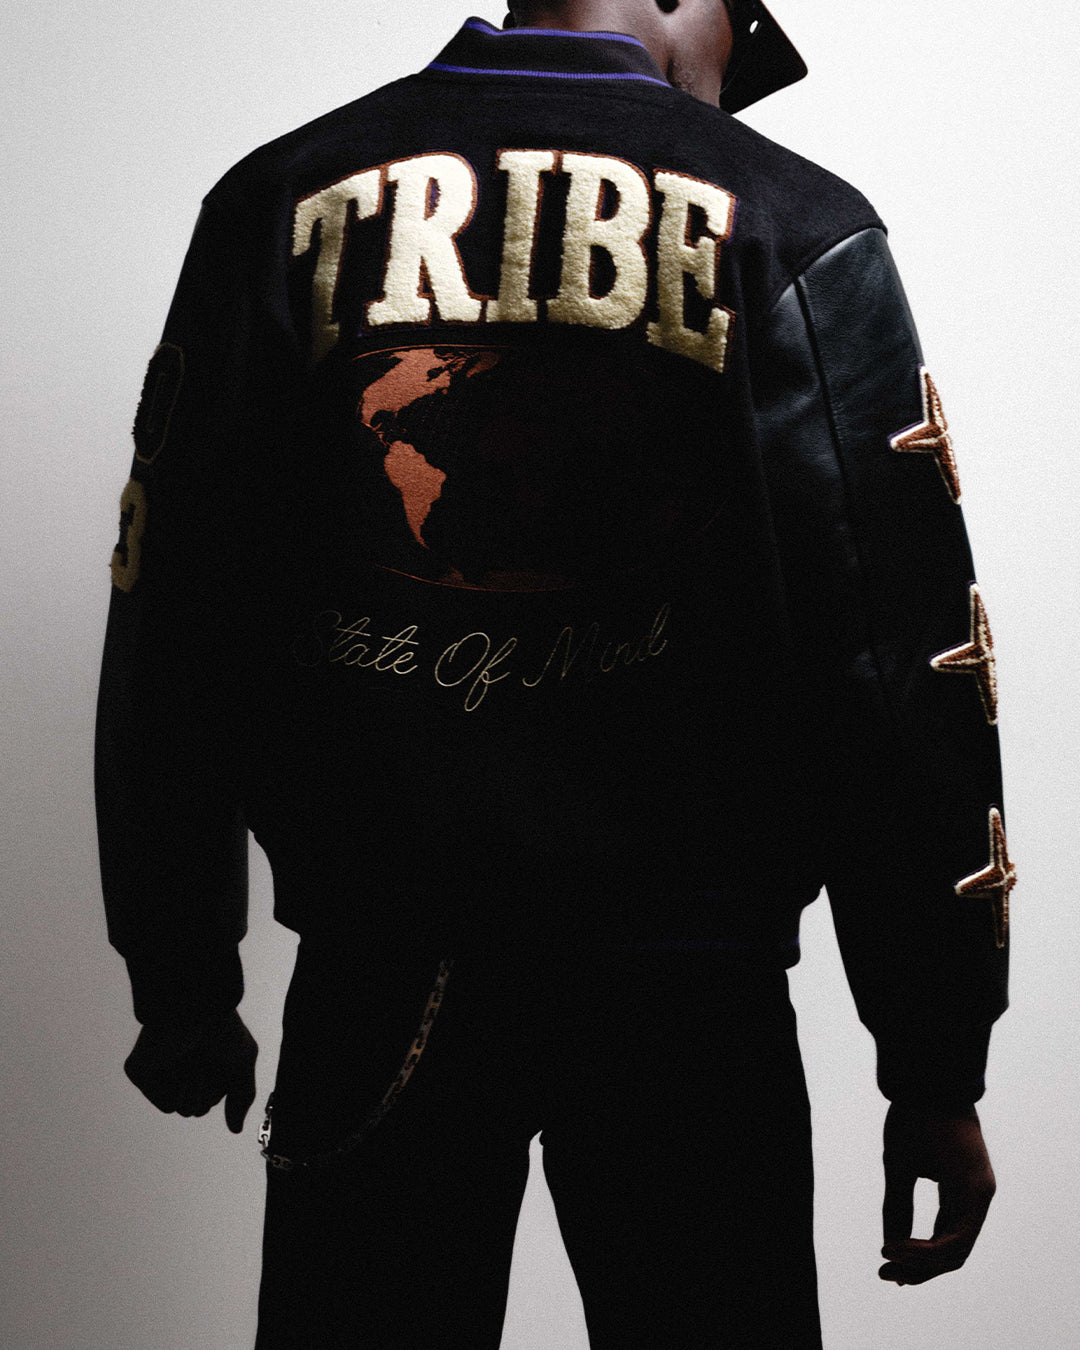 Freshiam Coats & Jackets "TRIBE" VARSITY JACKET — Black